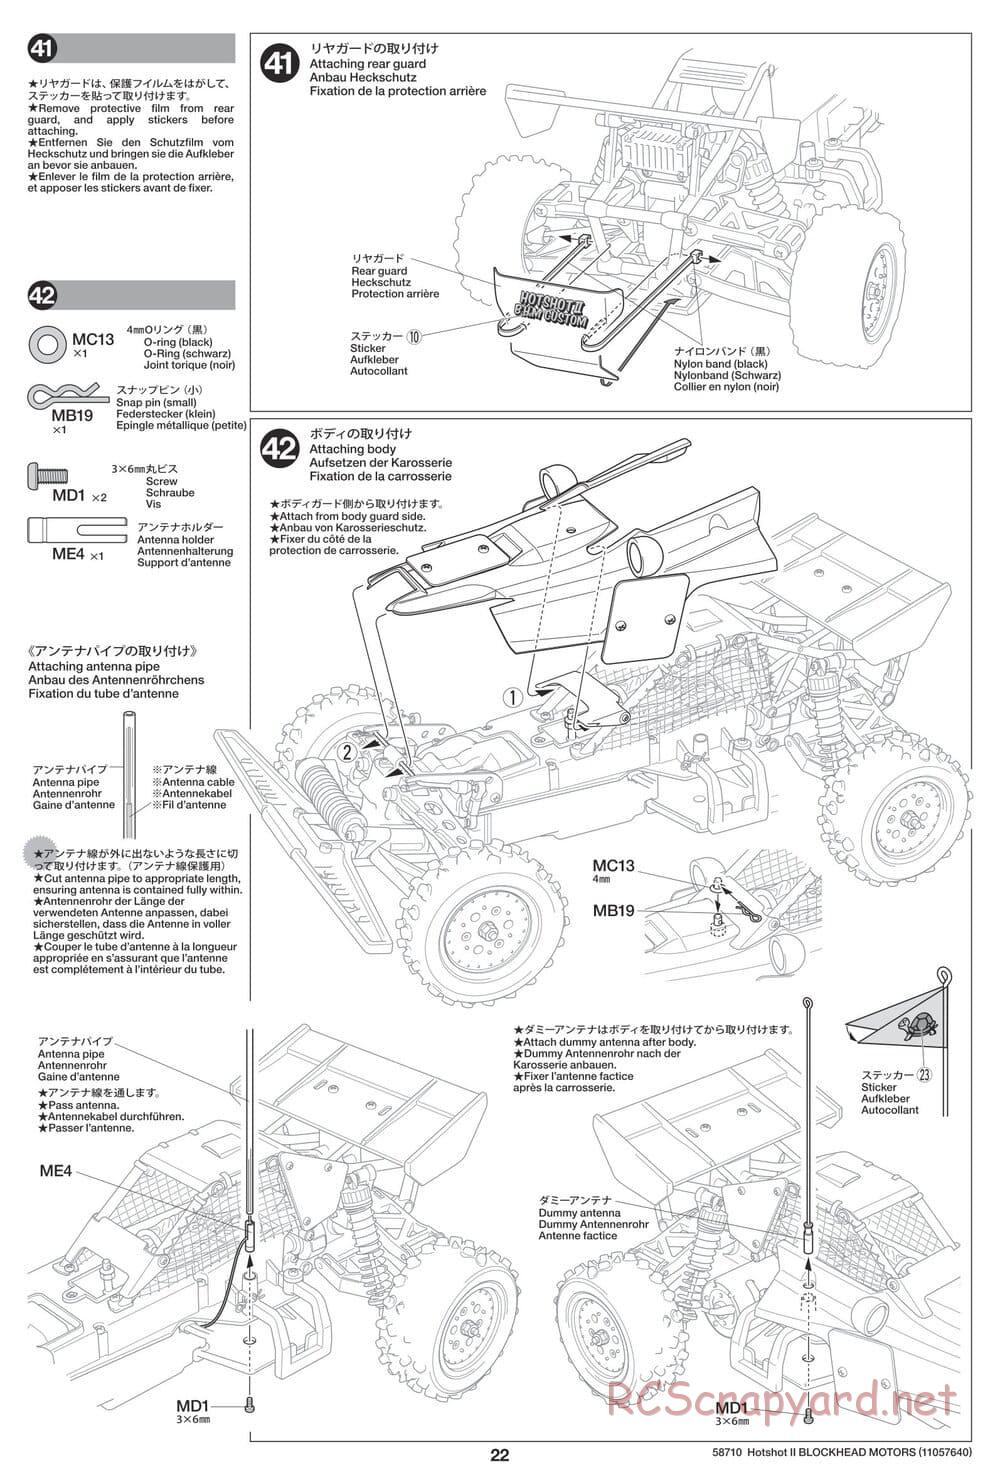 Tamiya - Hotshot II Blockhead Motors - HS Chassis - Manual - Page 22